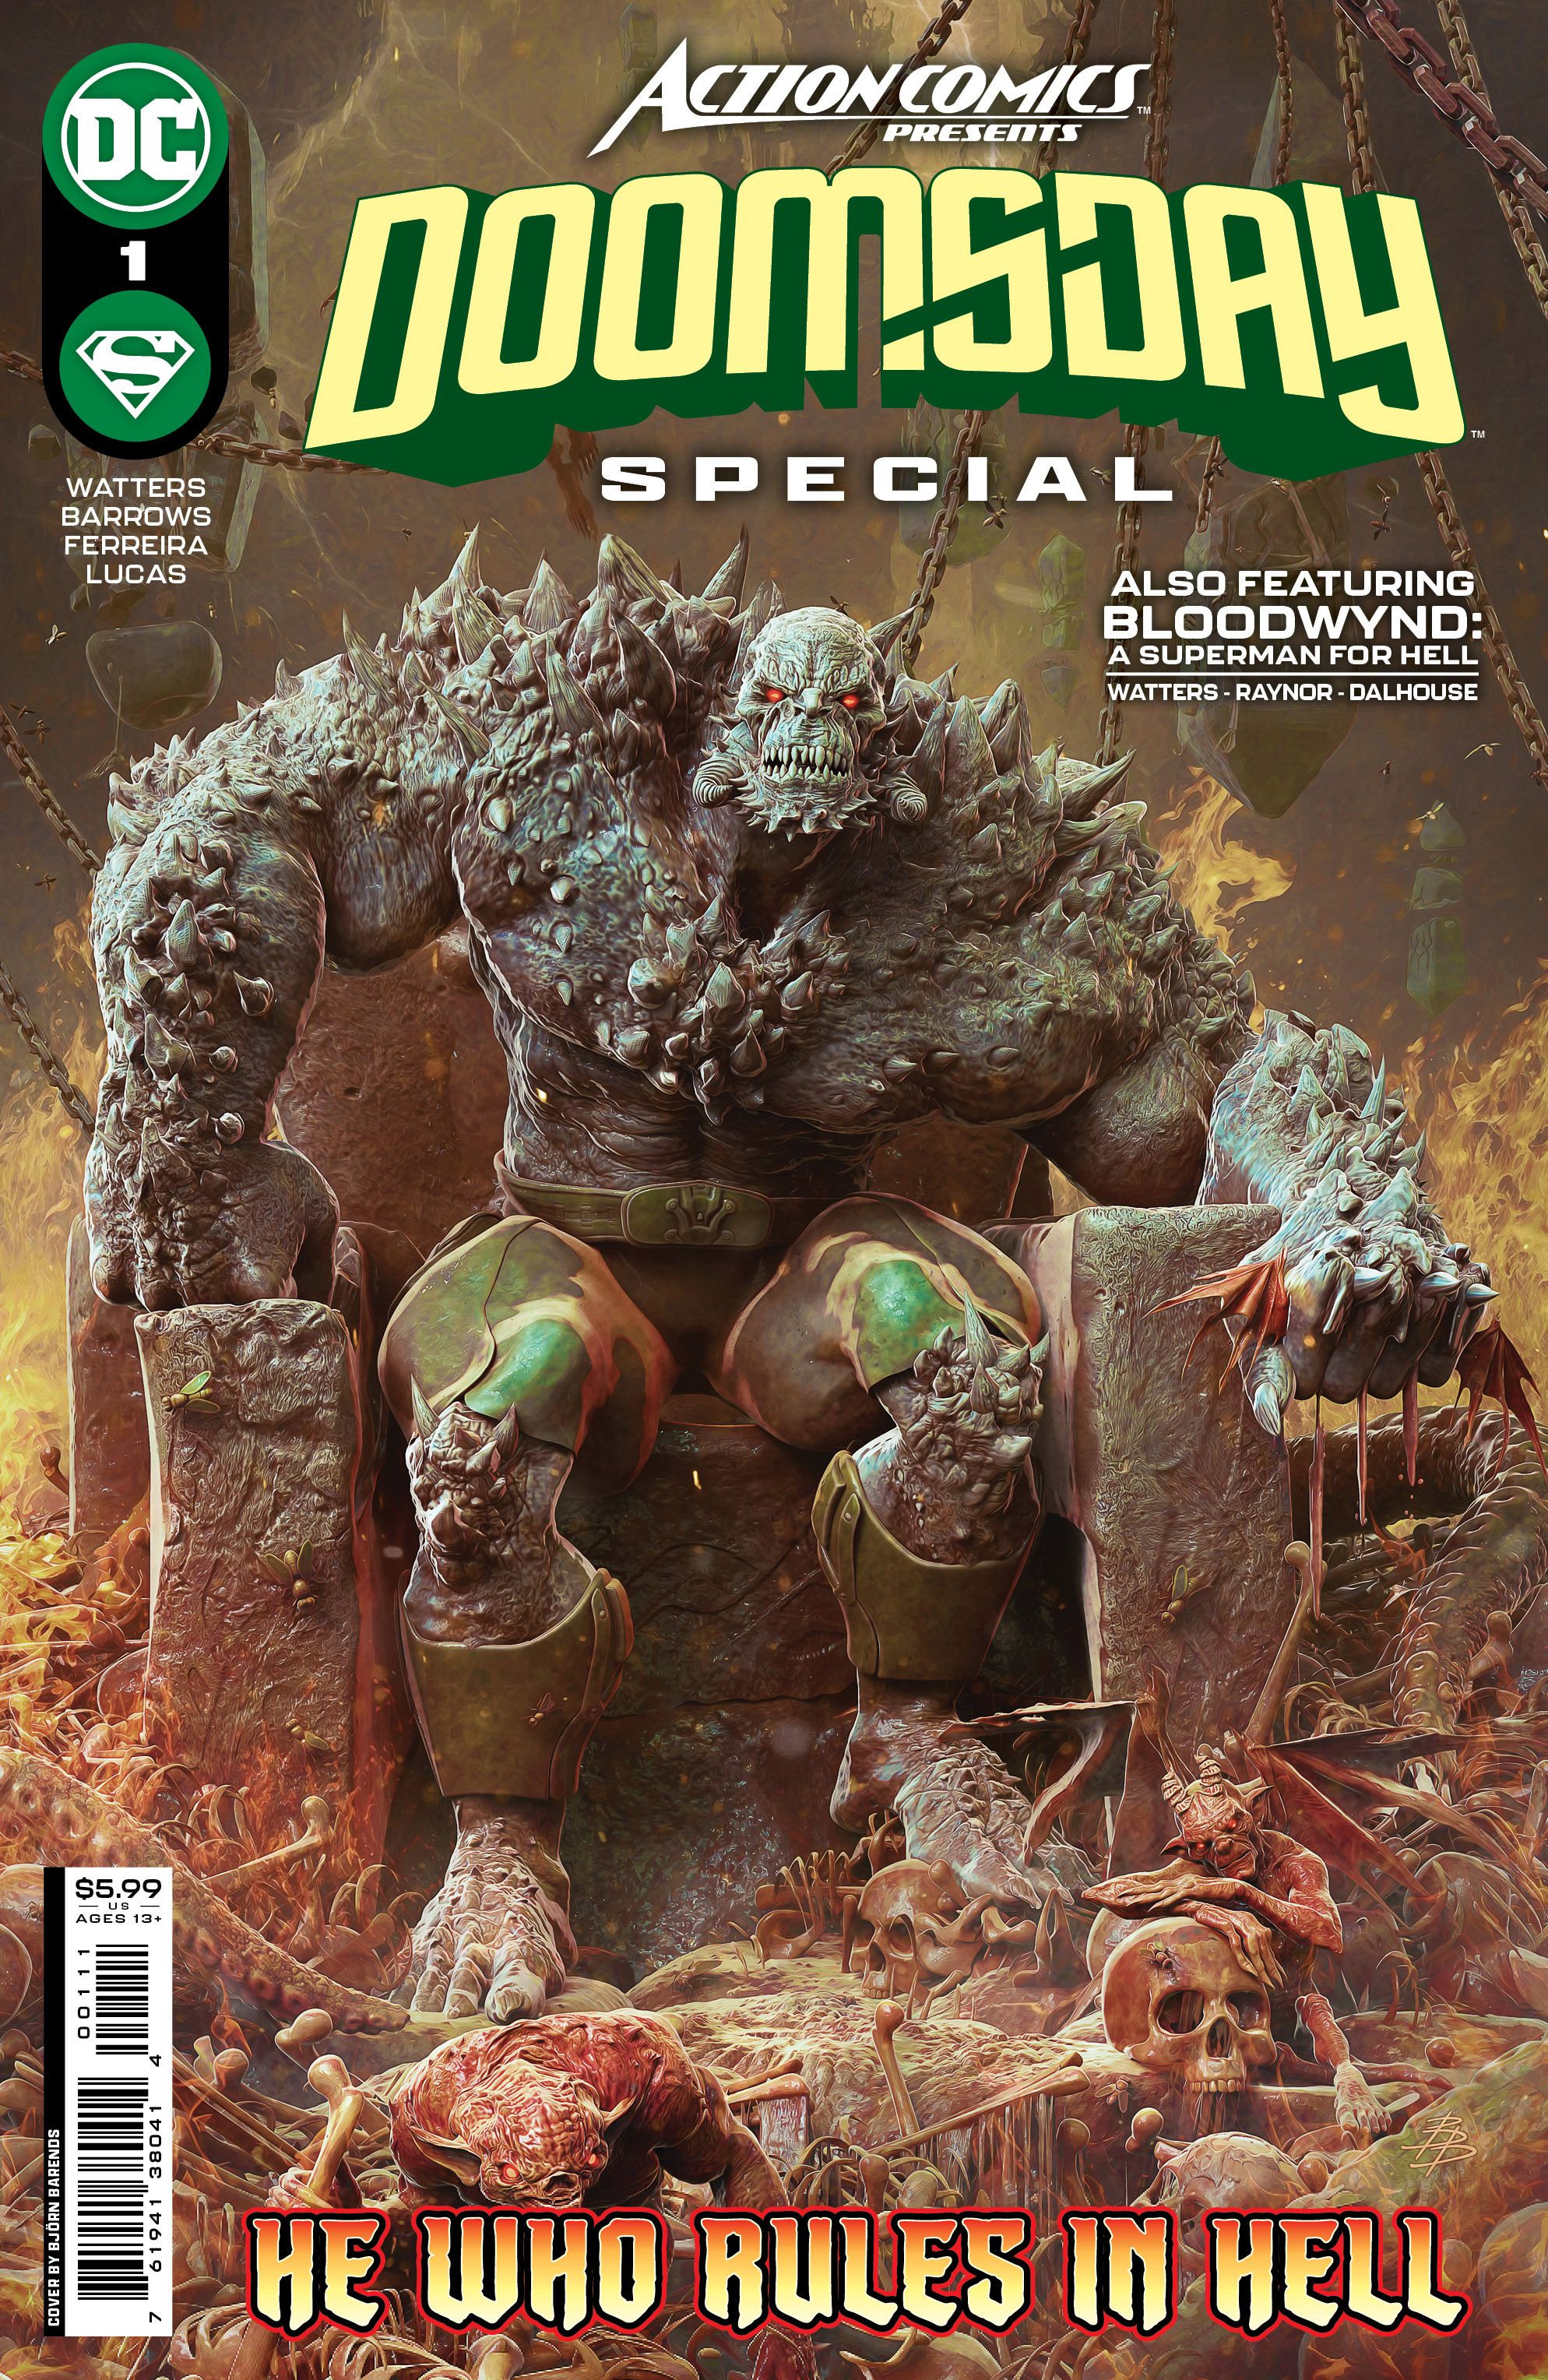 Action Comics Presents: Doomsday Special Comic